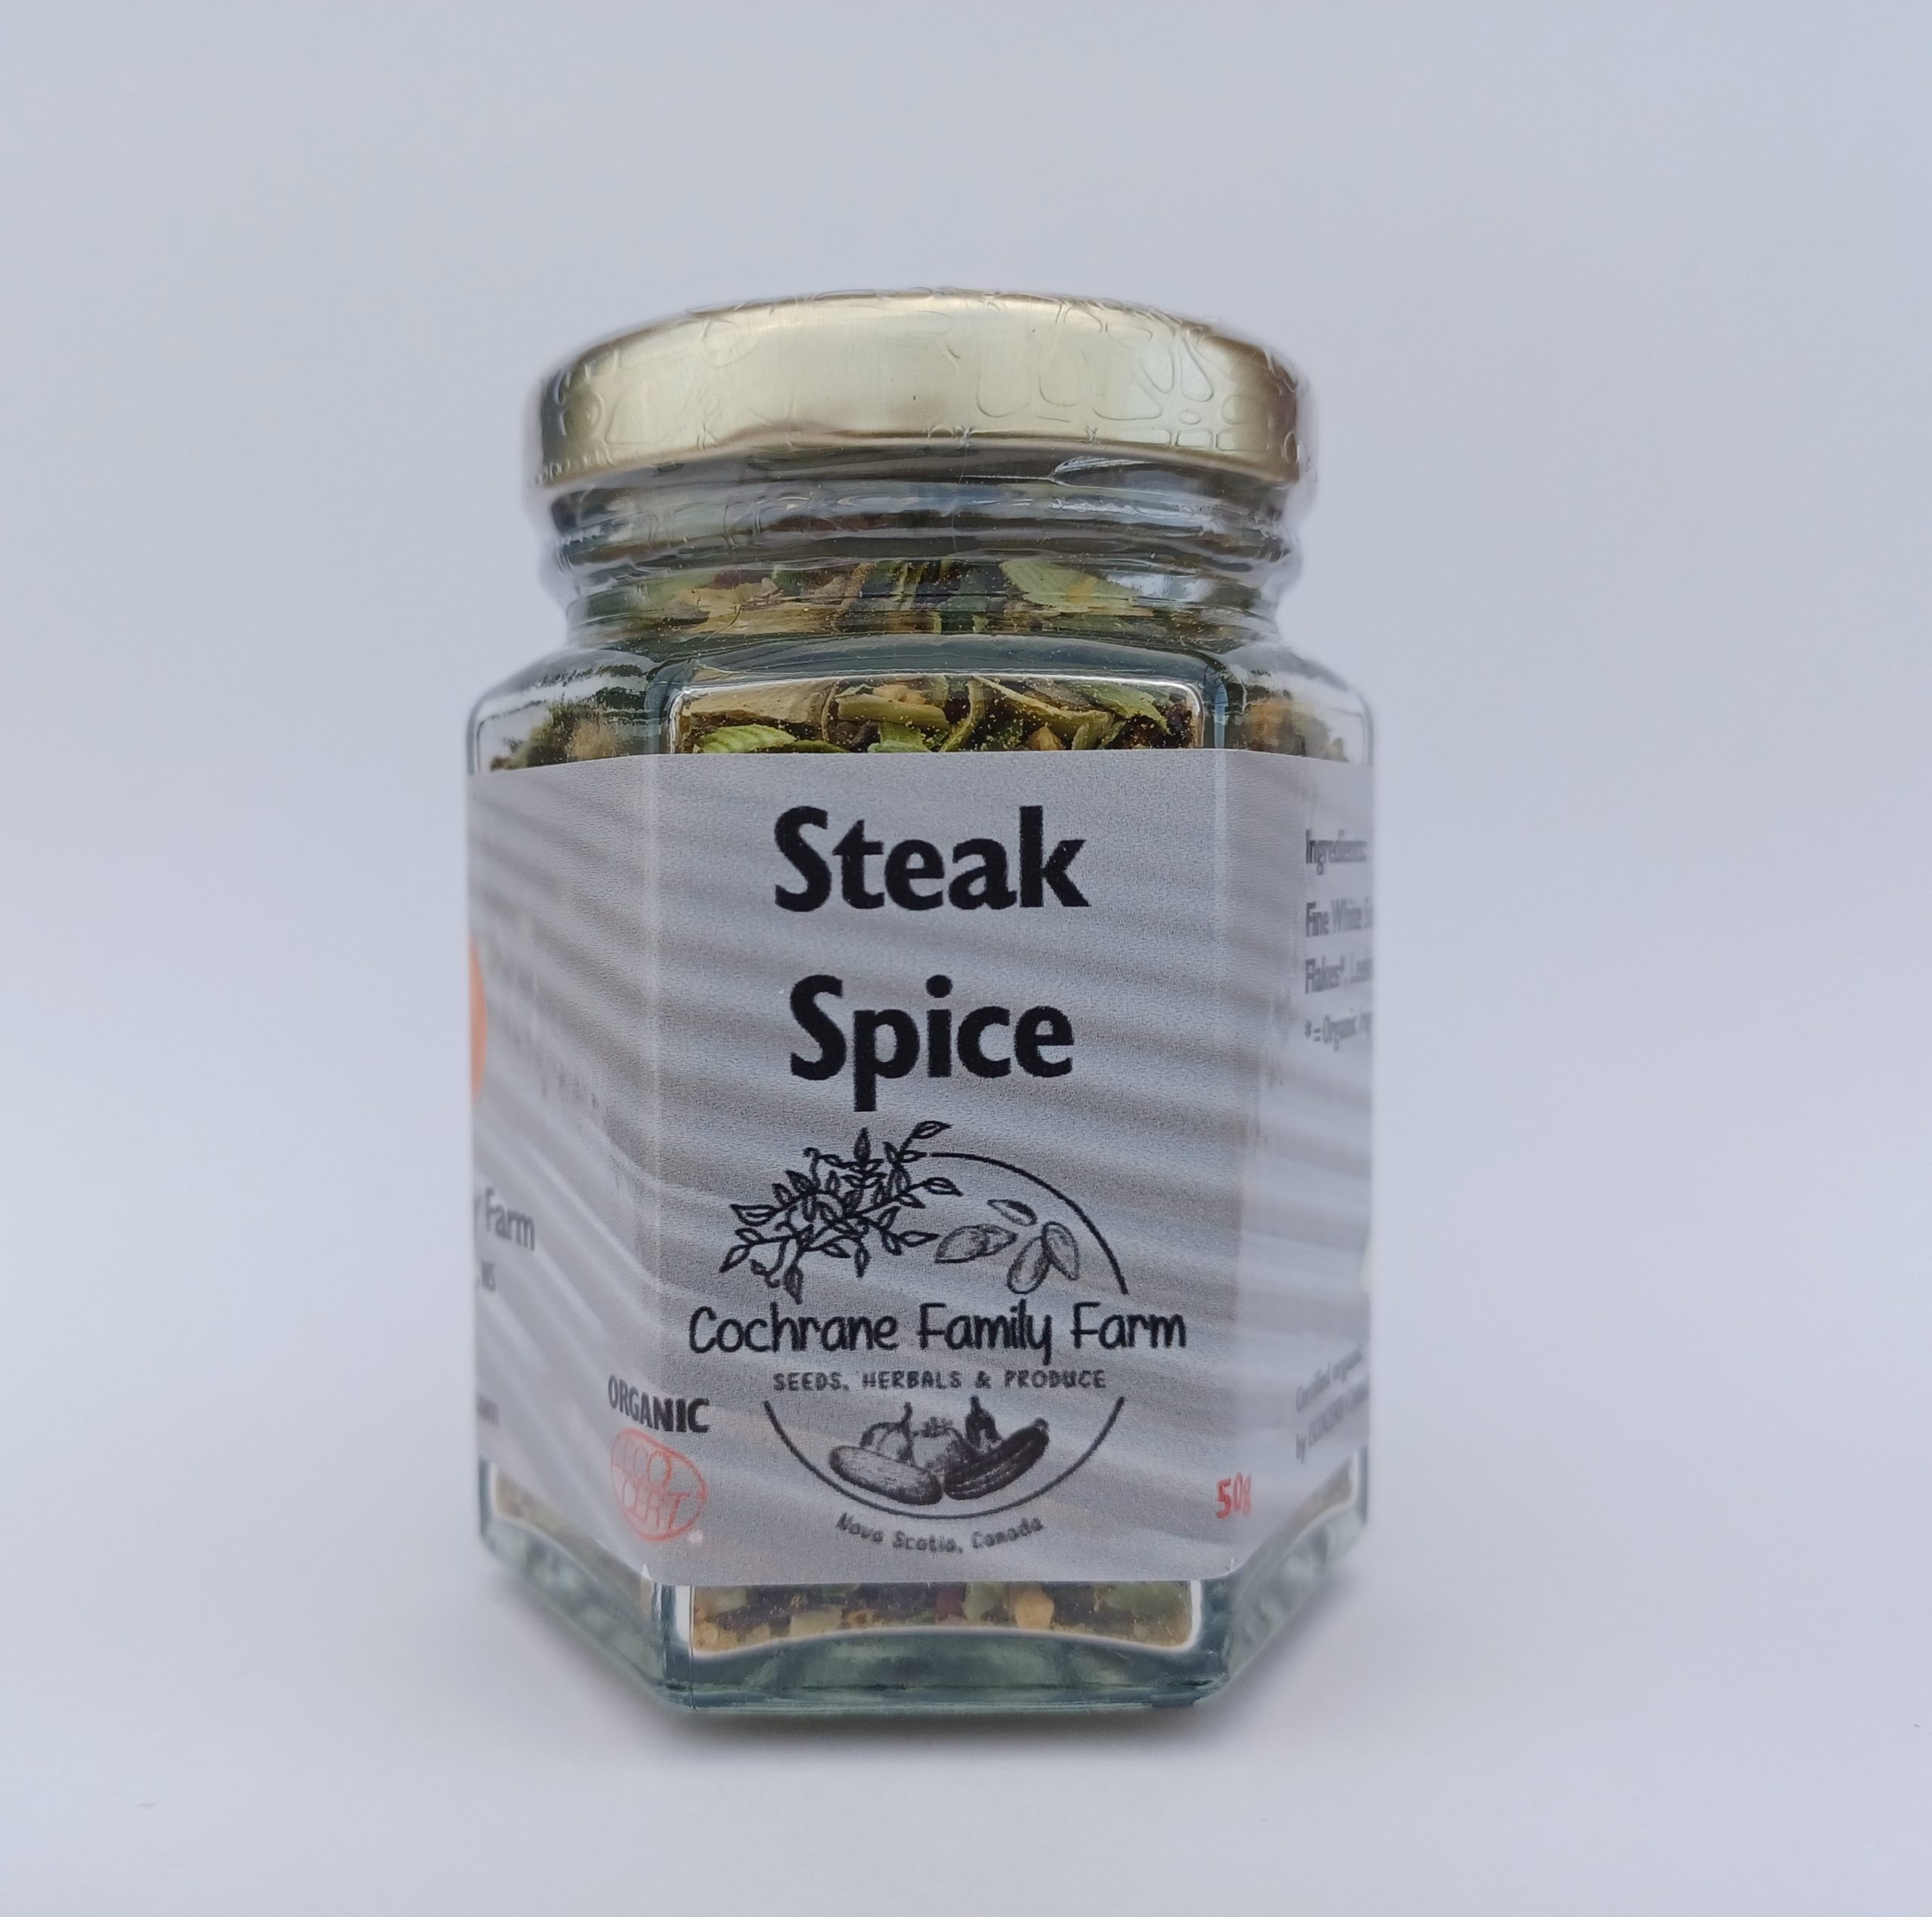 Steak Spice Certified Organic